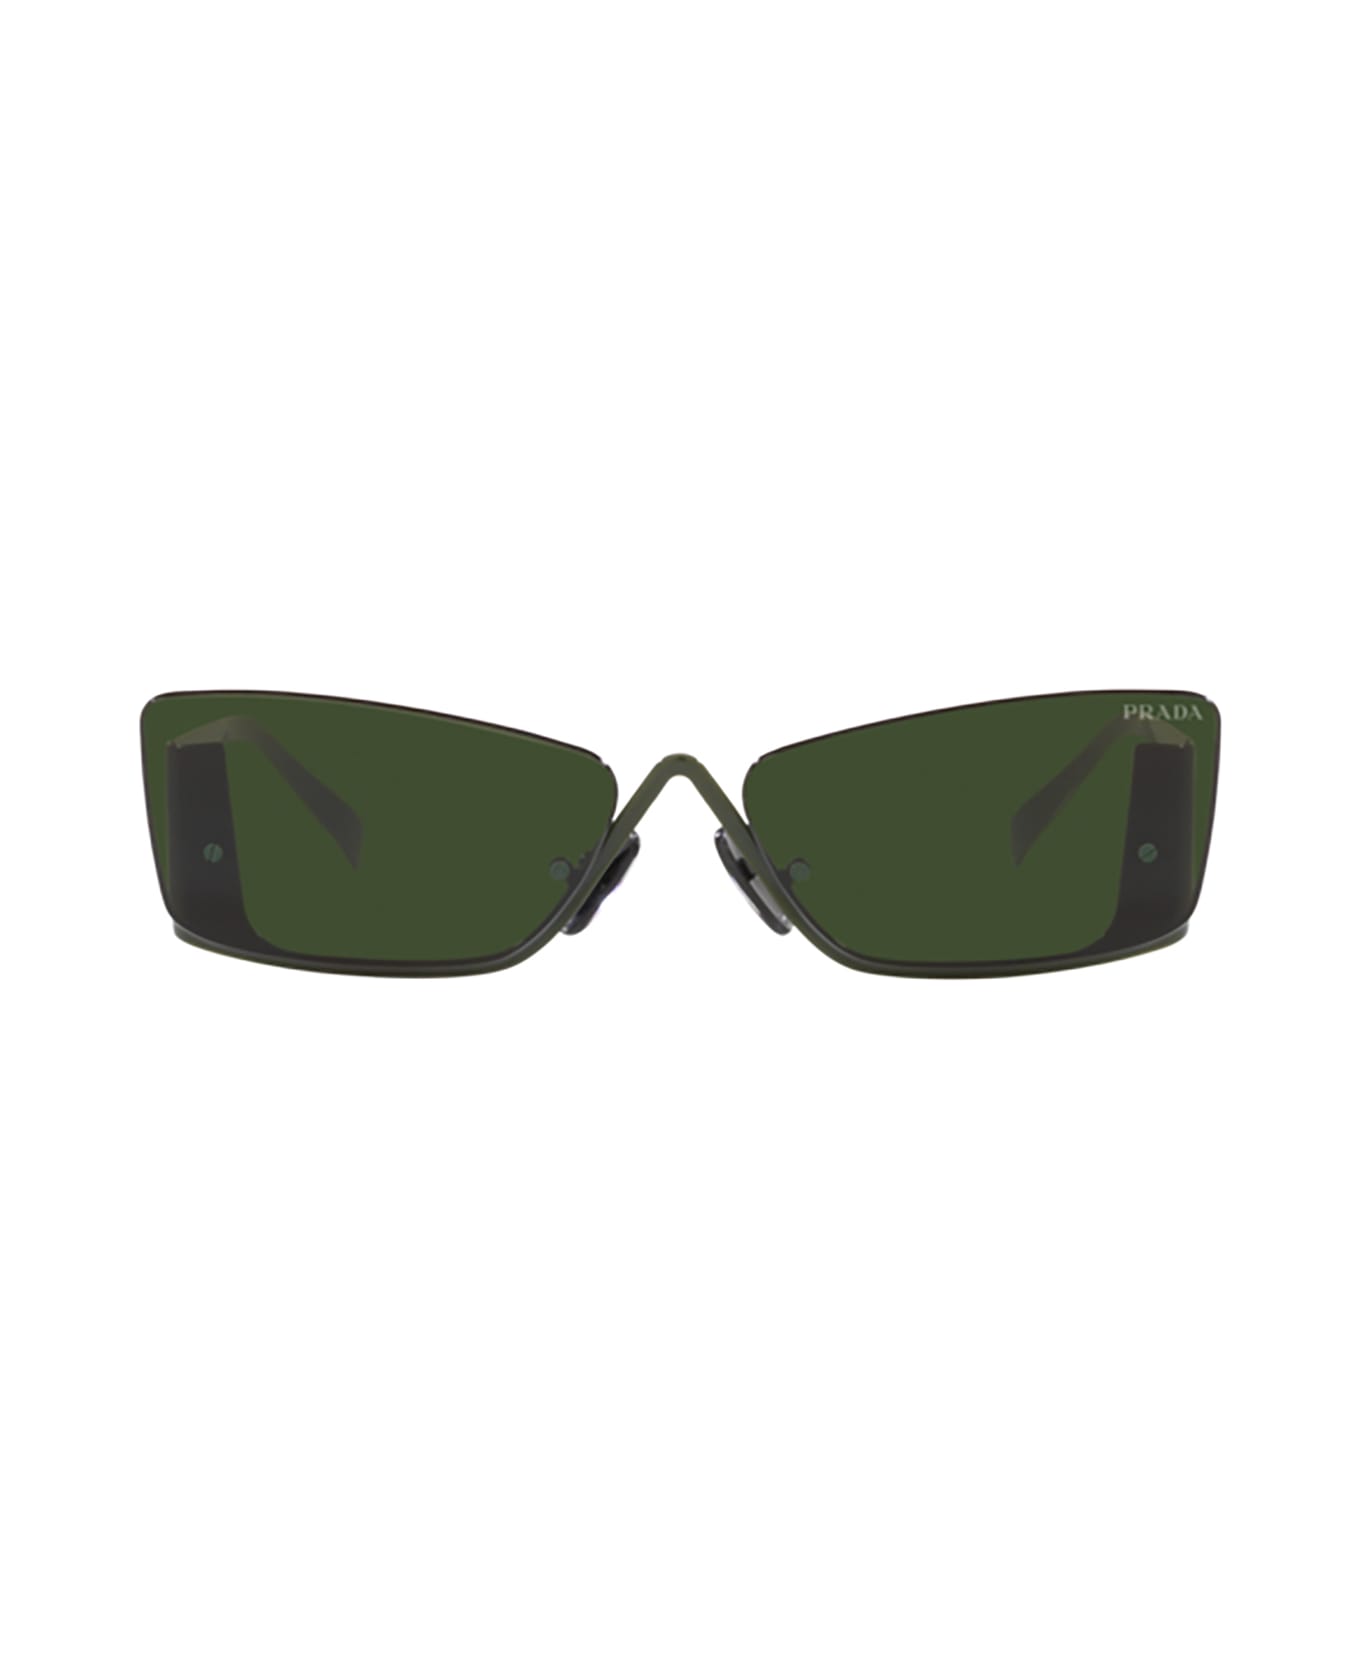 Prada Eyewear Pr 59zs Military Sunglasses - Military